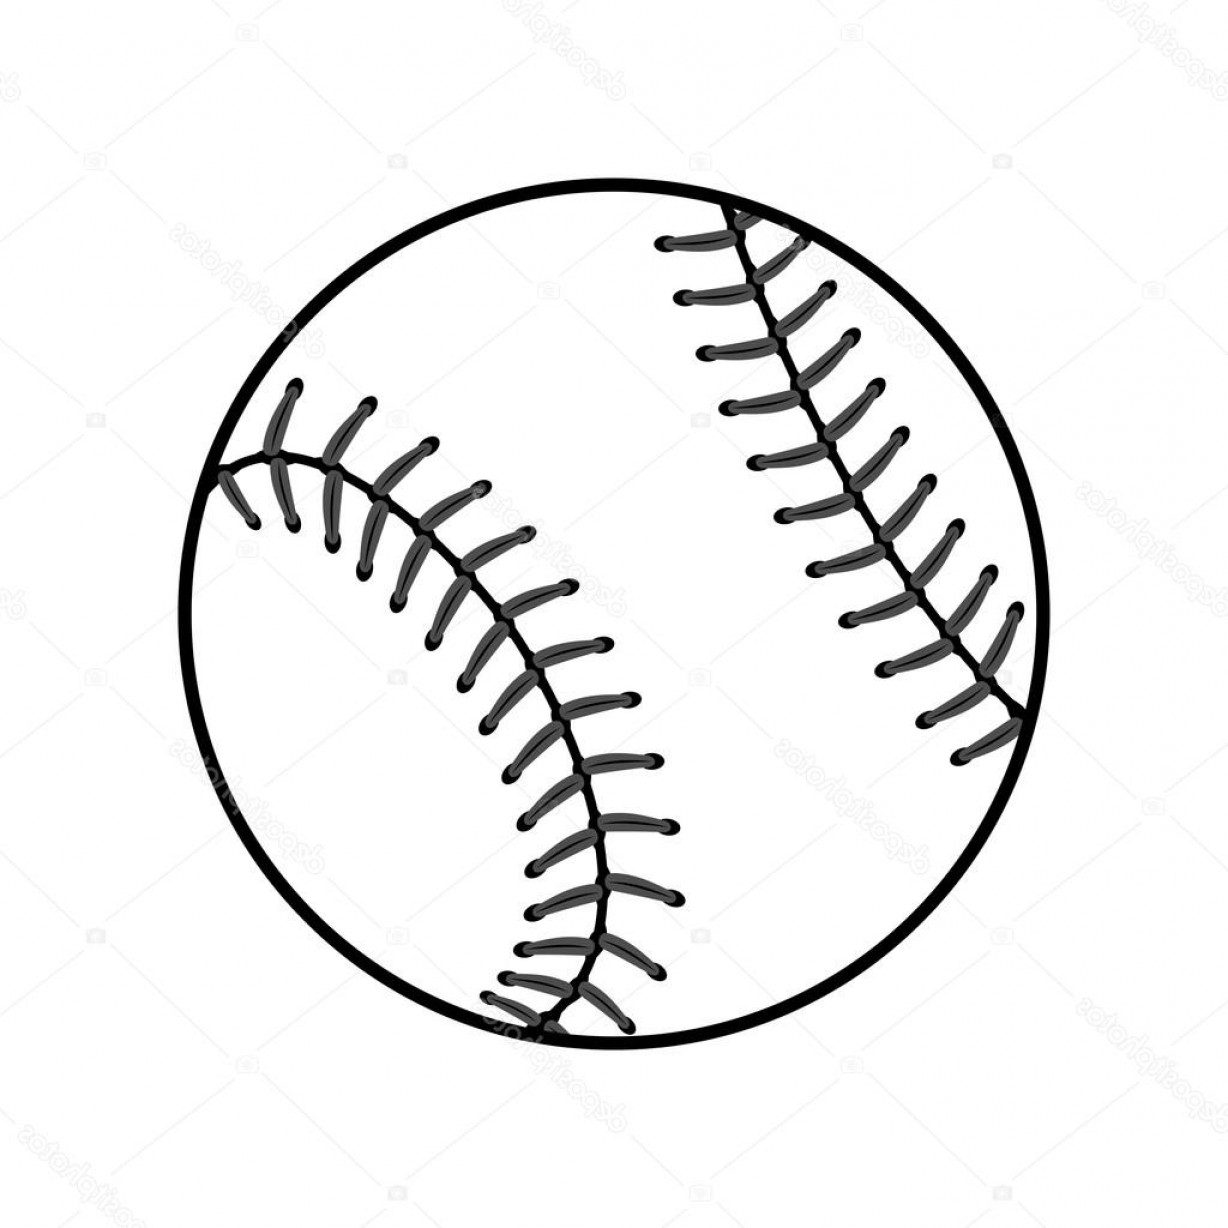 Baseball Ball Drawing at Explore collection of